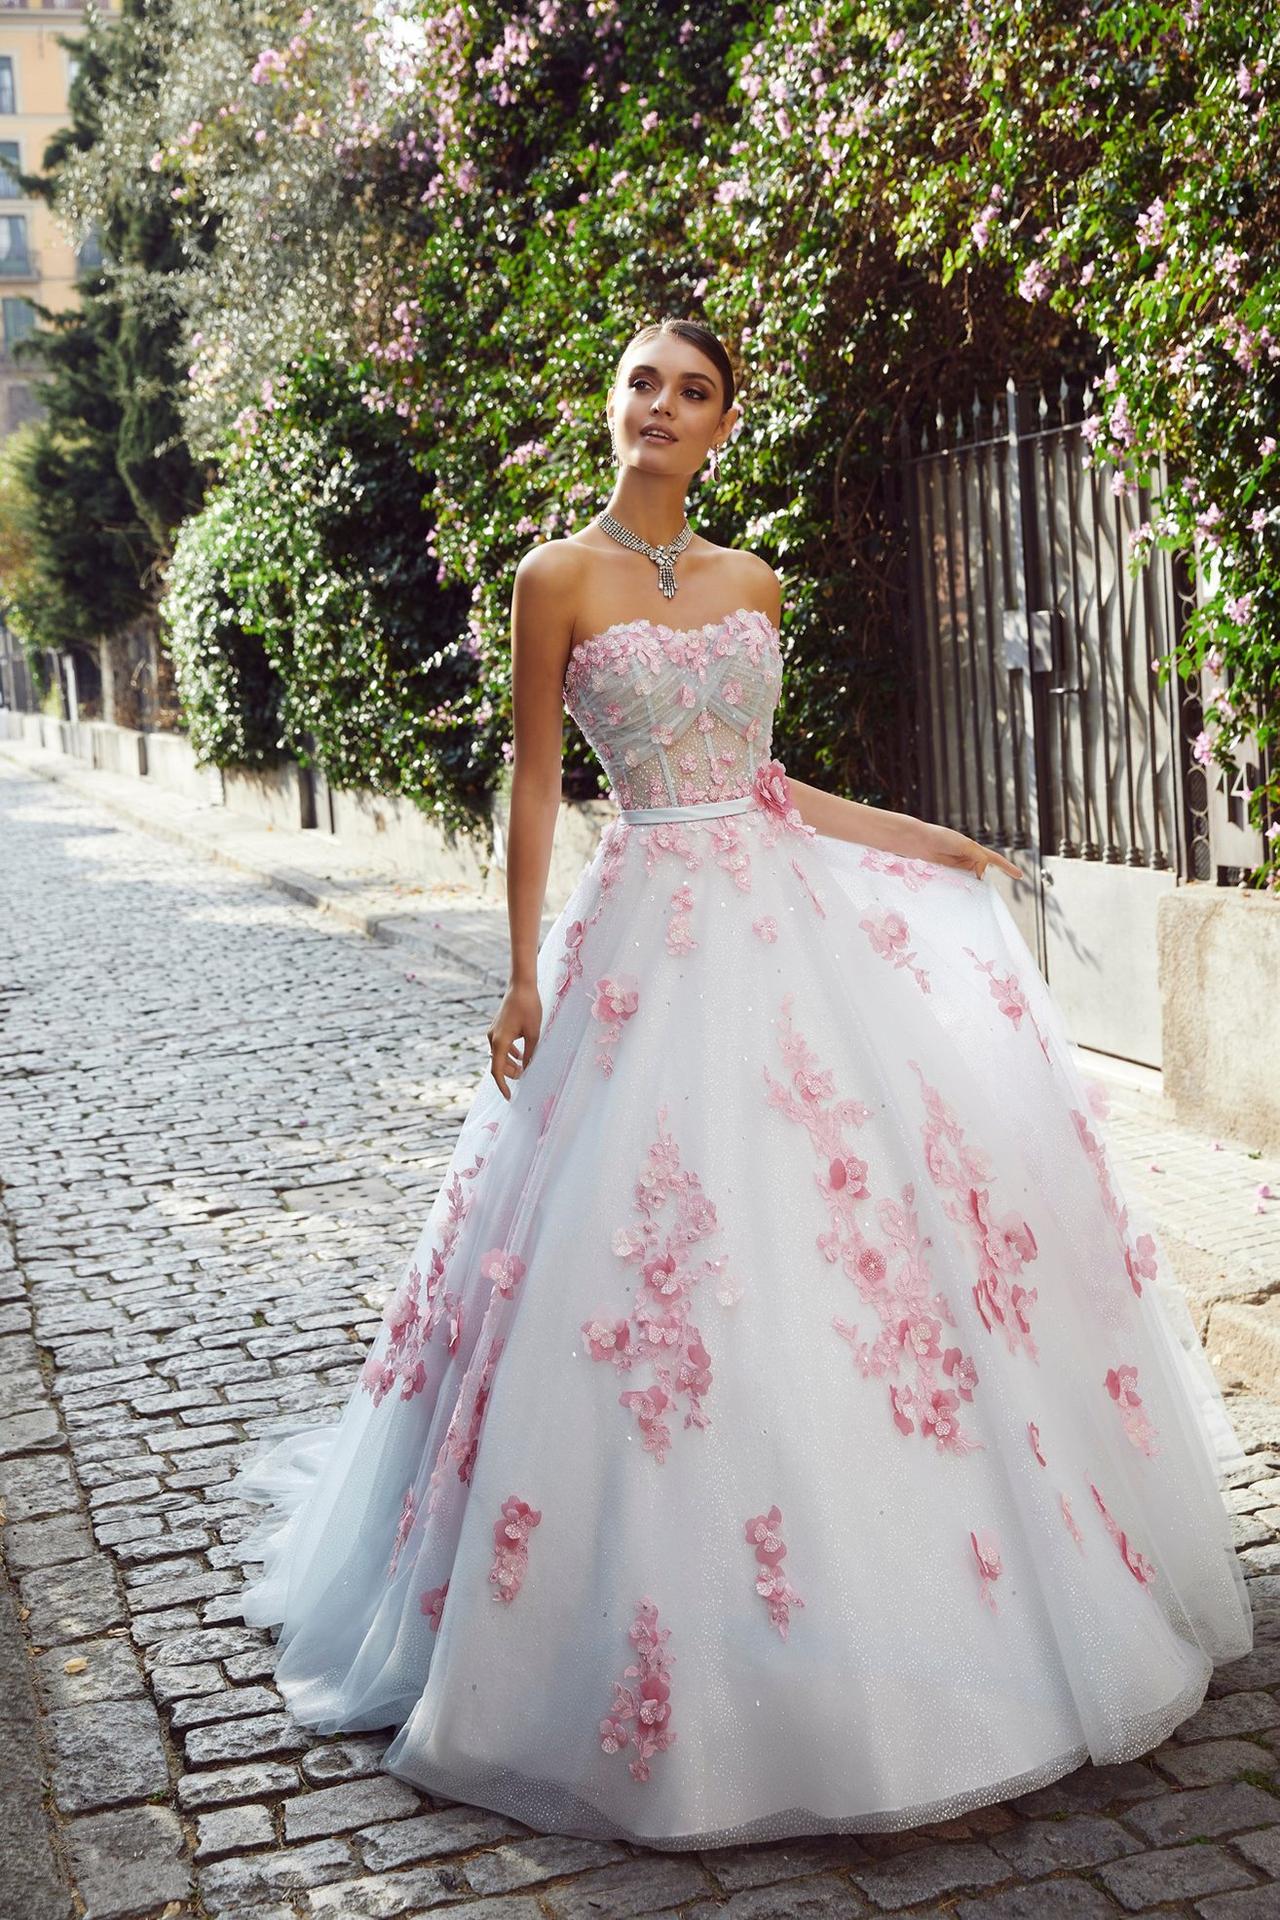 Vestido de novia civil con flores rosadas